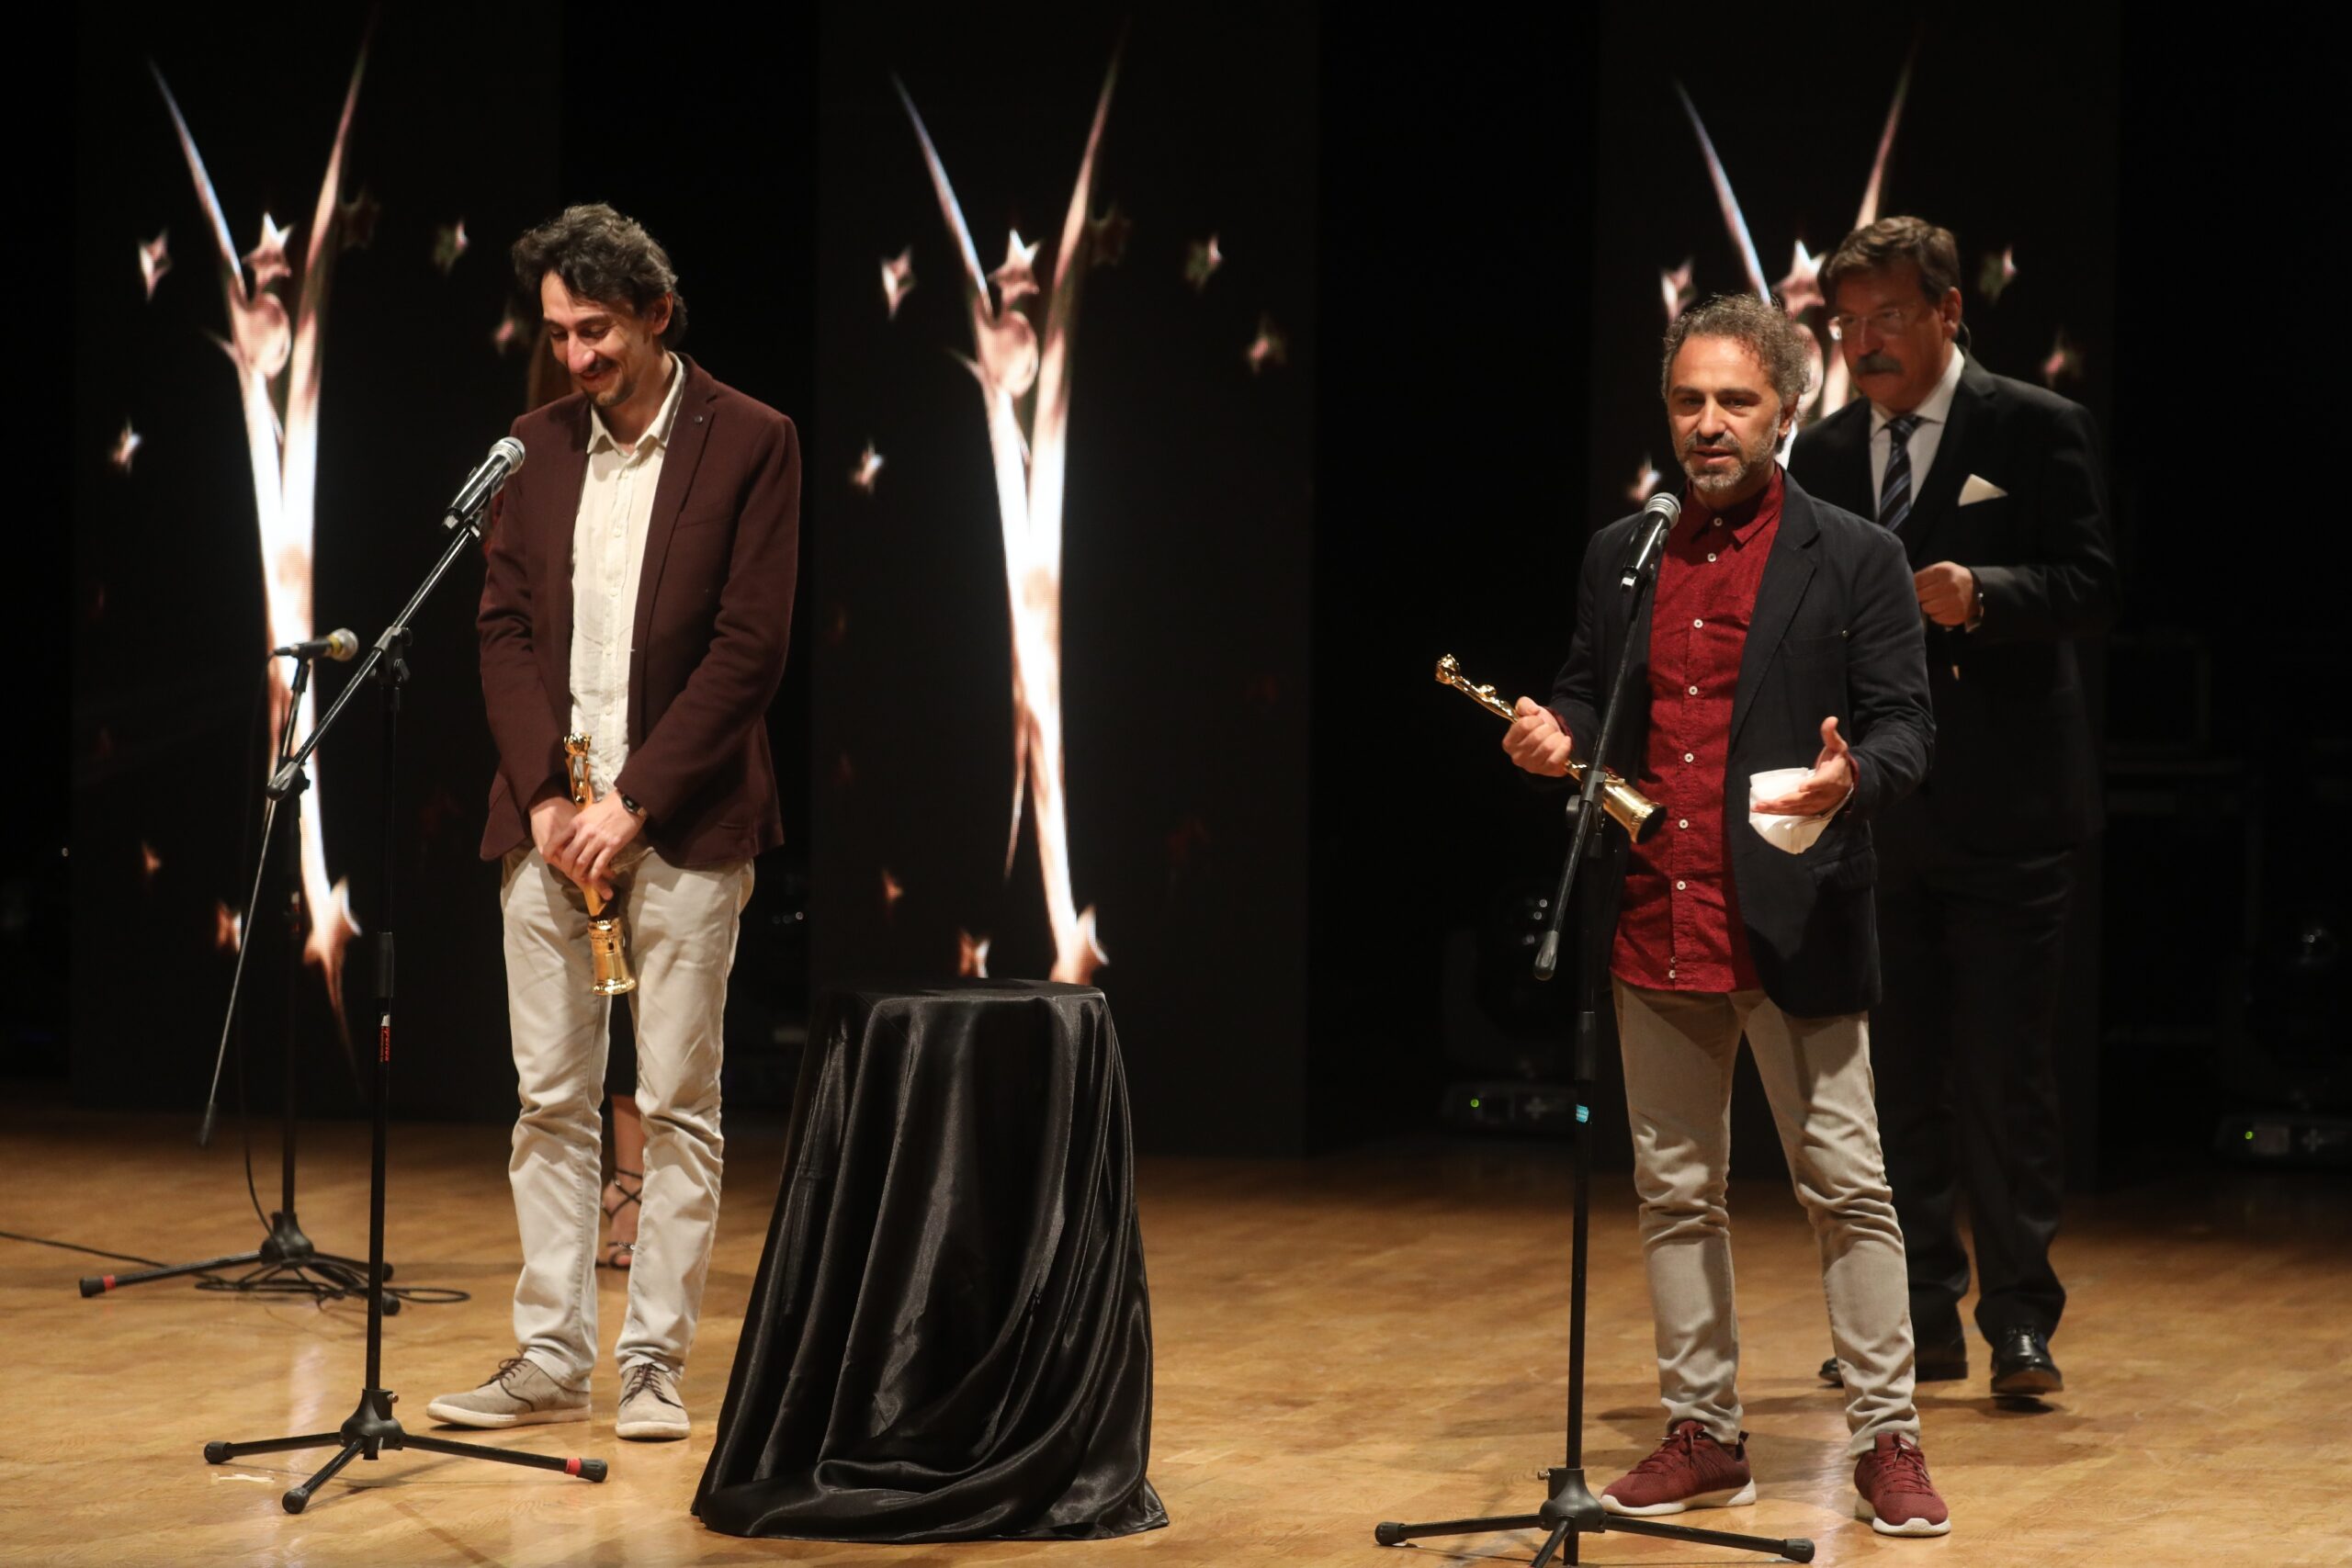 SILENCED TREE wins at Adana Film Festival